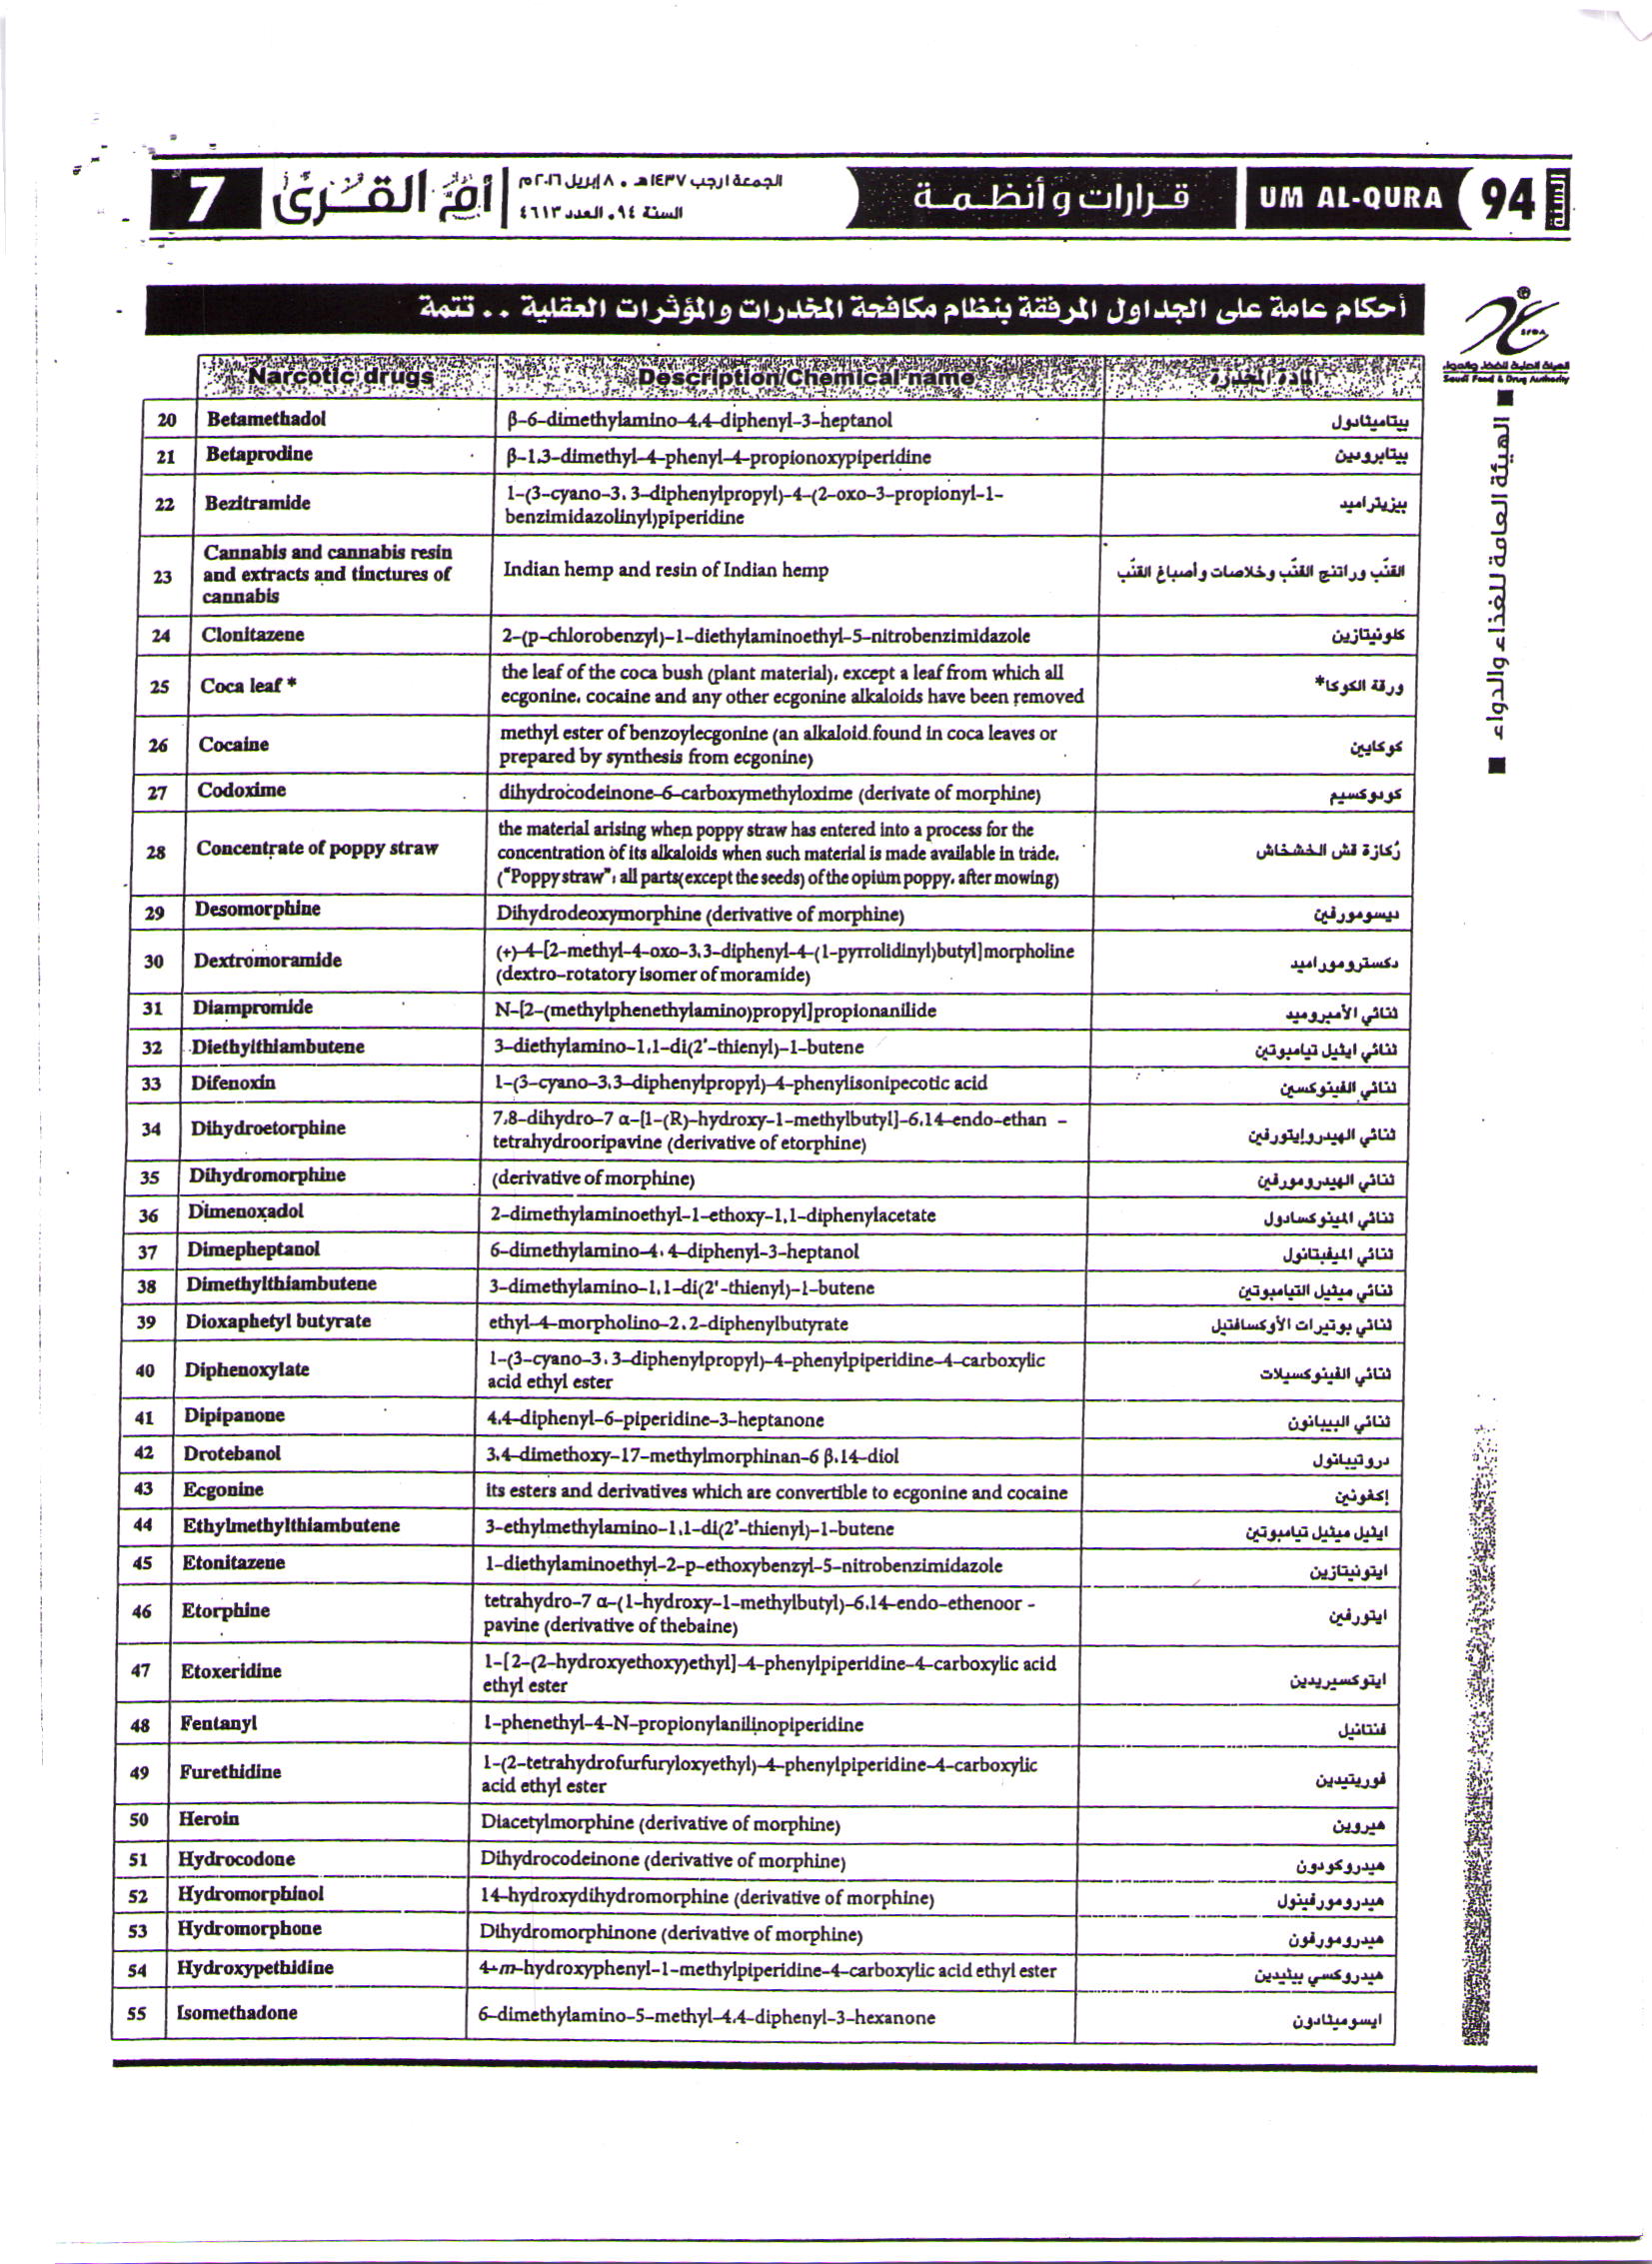 List of Banned Medicines/Drugs in the Kingdom of Saudi Arabia Bureau